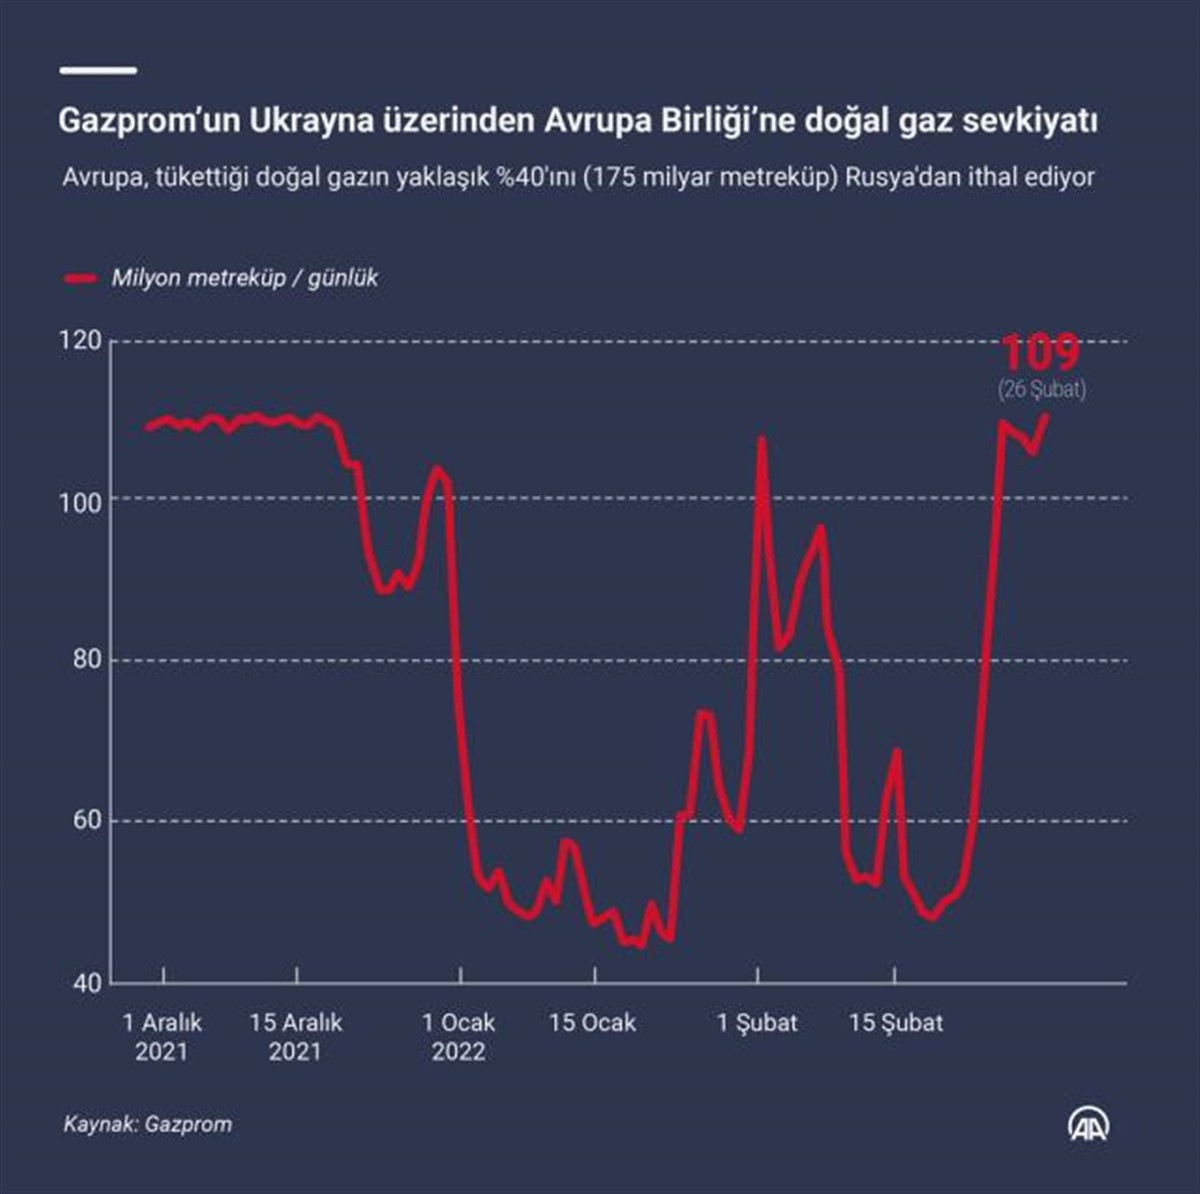 Rusya Avrupa'ya gaz vermeyi kesecek mi